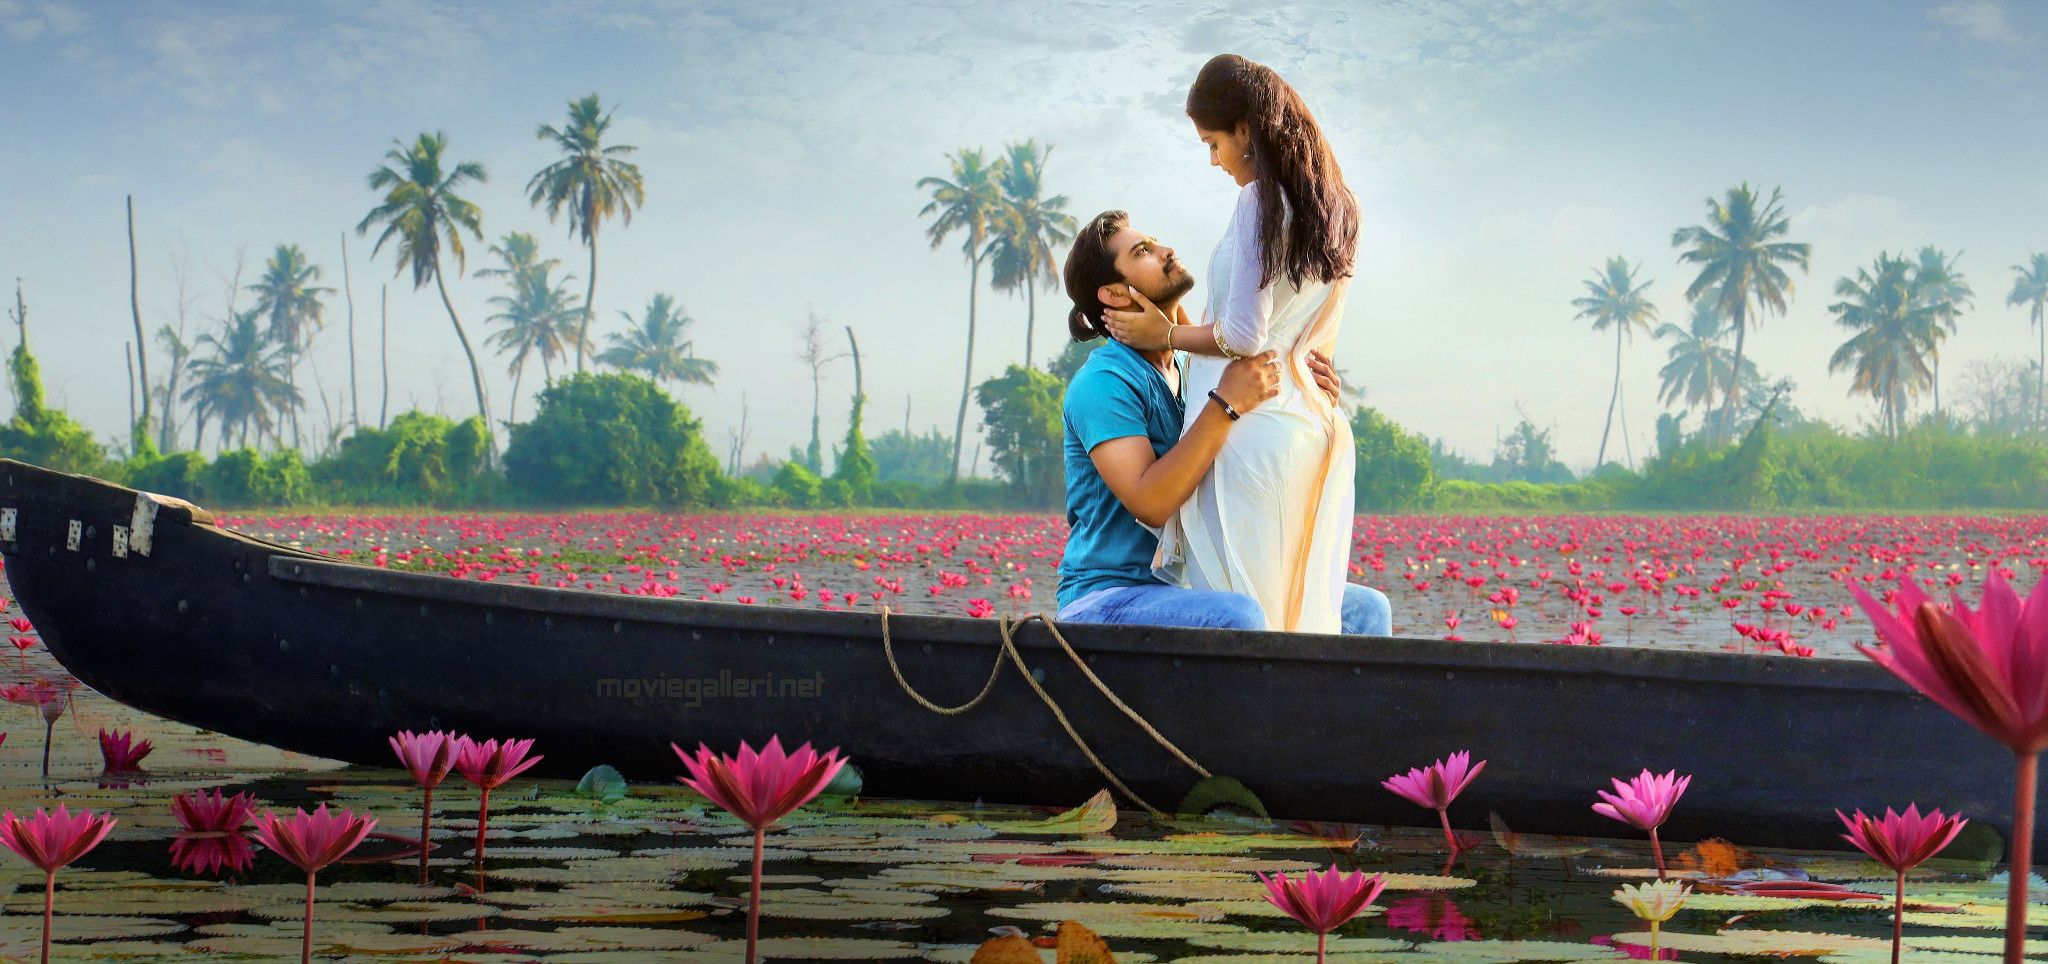 Raj Tarun Riddhi Kumar Lover Movie Photo HD. New Movie Posters